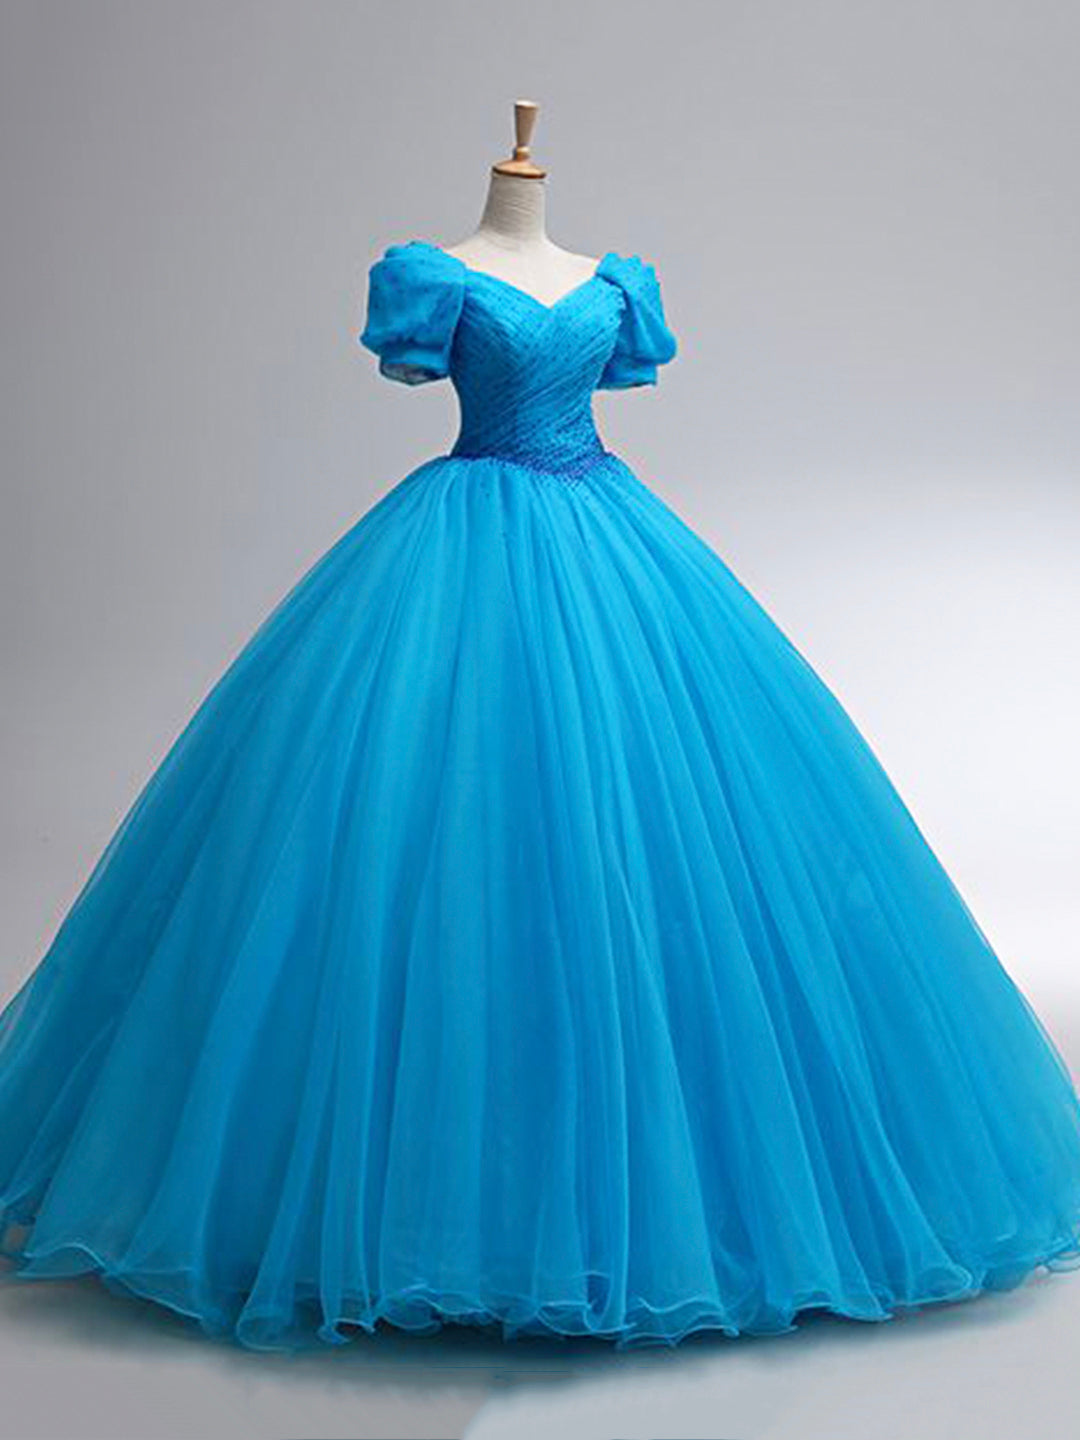 Beautiful Blue Rhinestone Floor Length Corset Prom Dress, A-Line Short Sleeve Evening Dress outfit, Bridesmaid Dresses Mismatched